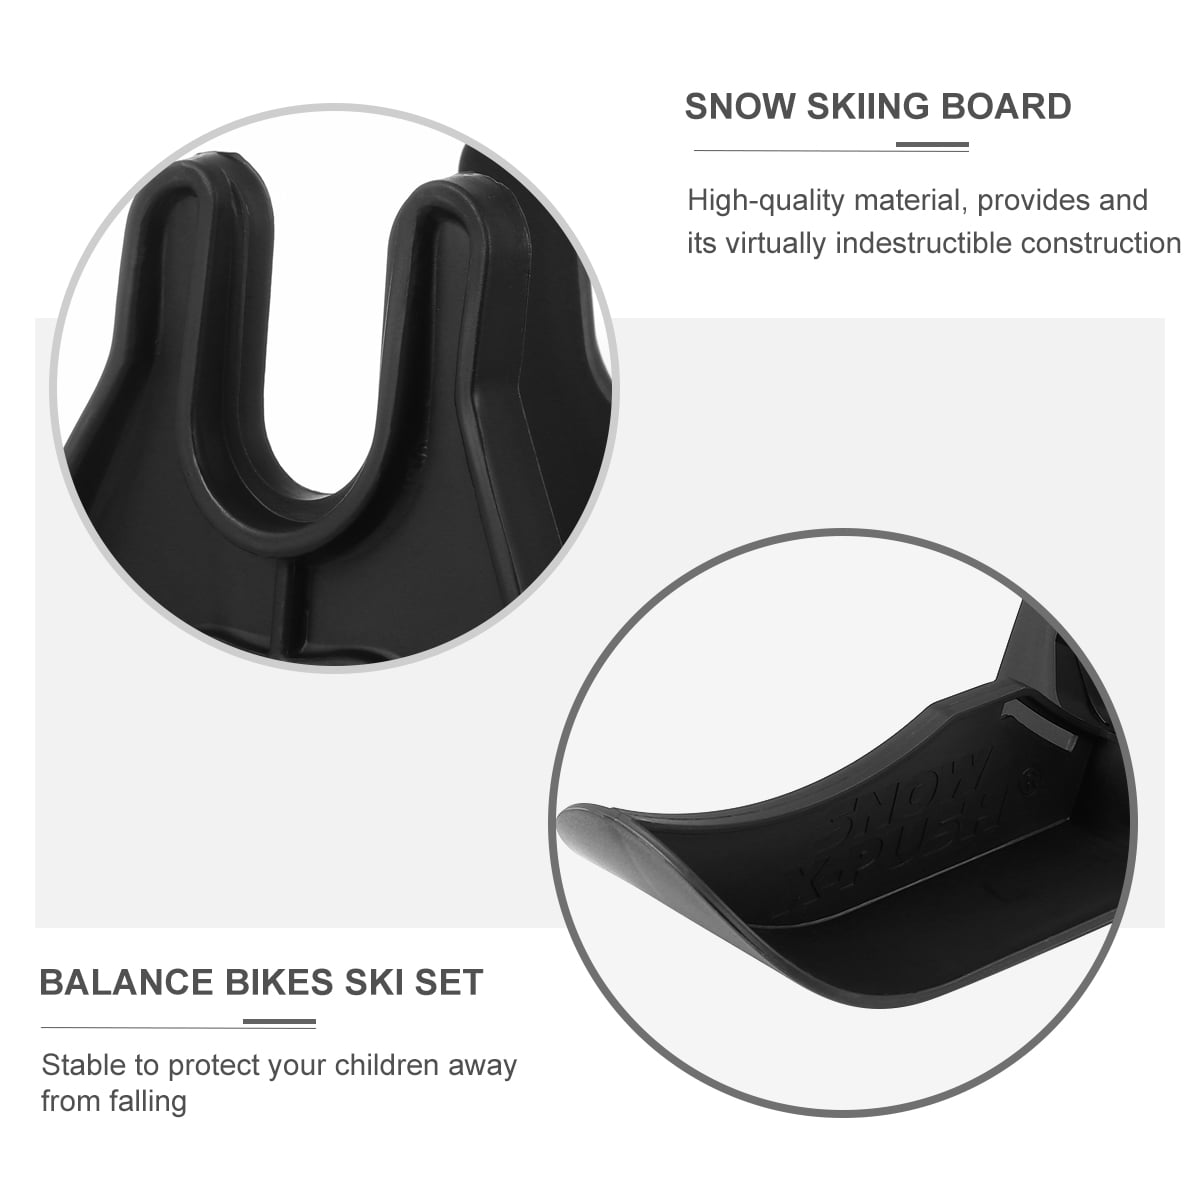 1 Set of Skiing Board Ski Set Snow Ski Set for Balance Bikes 